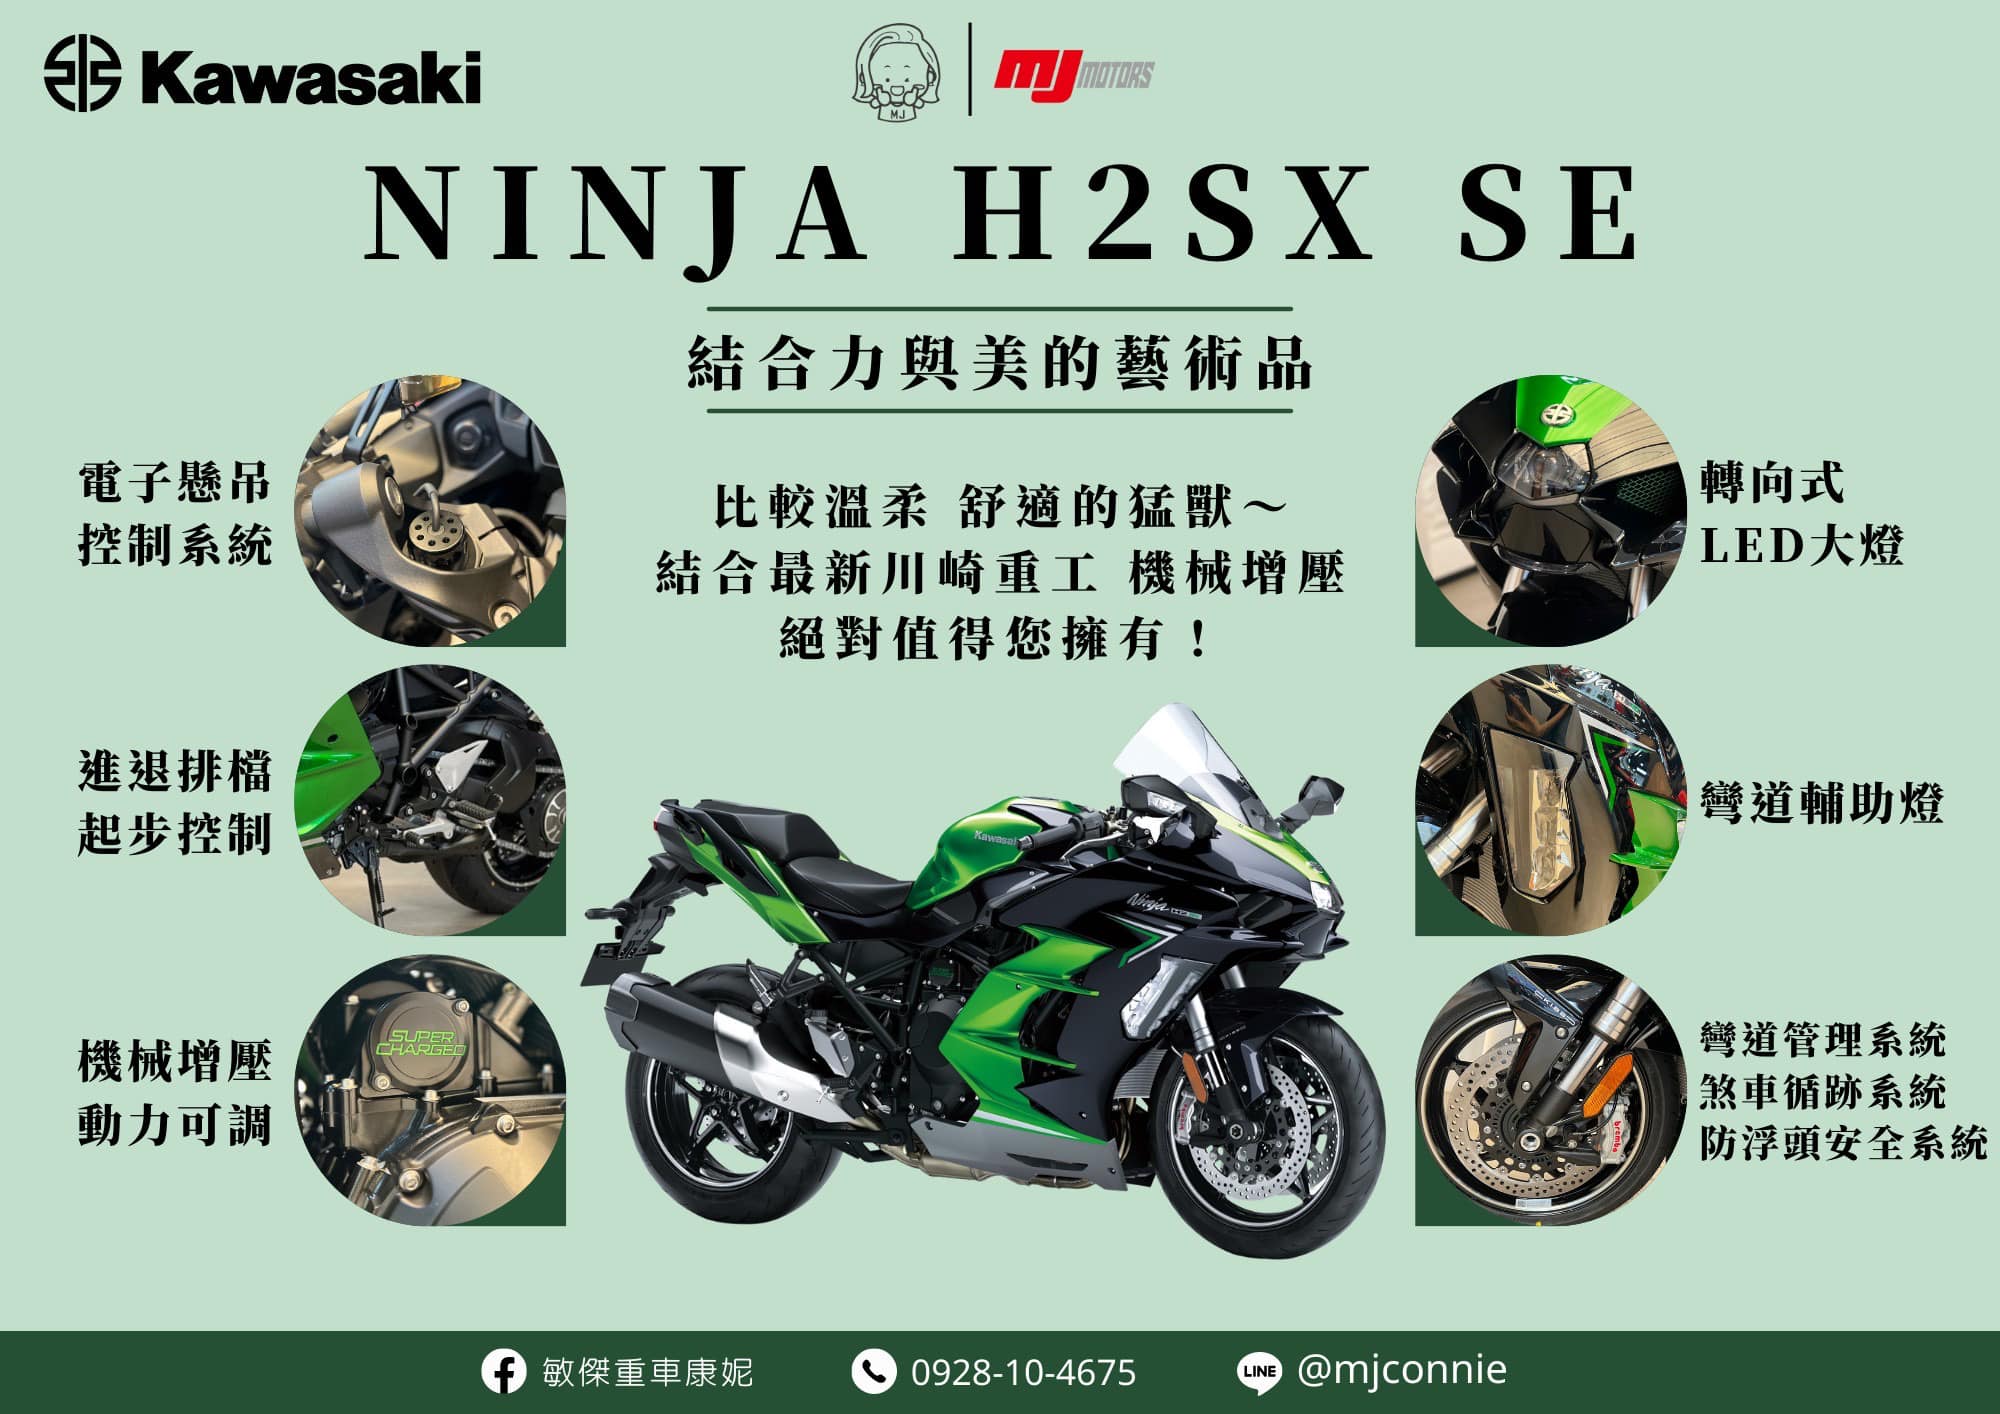 KAWASAKI Ninja H2 SX新車出售中 『敏傑康妮』Kawasaki H2SX SE 低利率方案實施中 給您最滿意的服務 請訊息給康妮 | 敏傑車業資深銷售專員 康妮 Connie